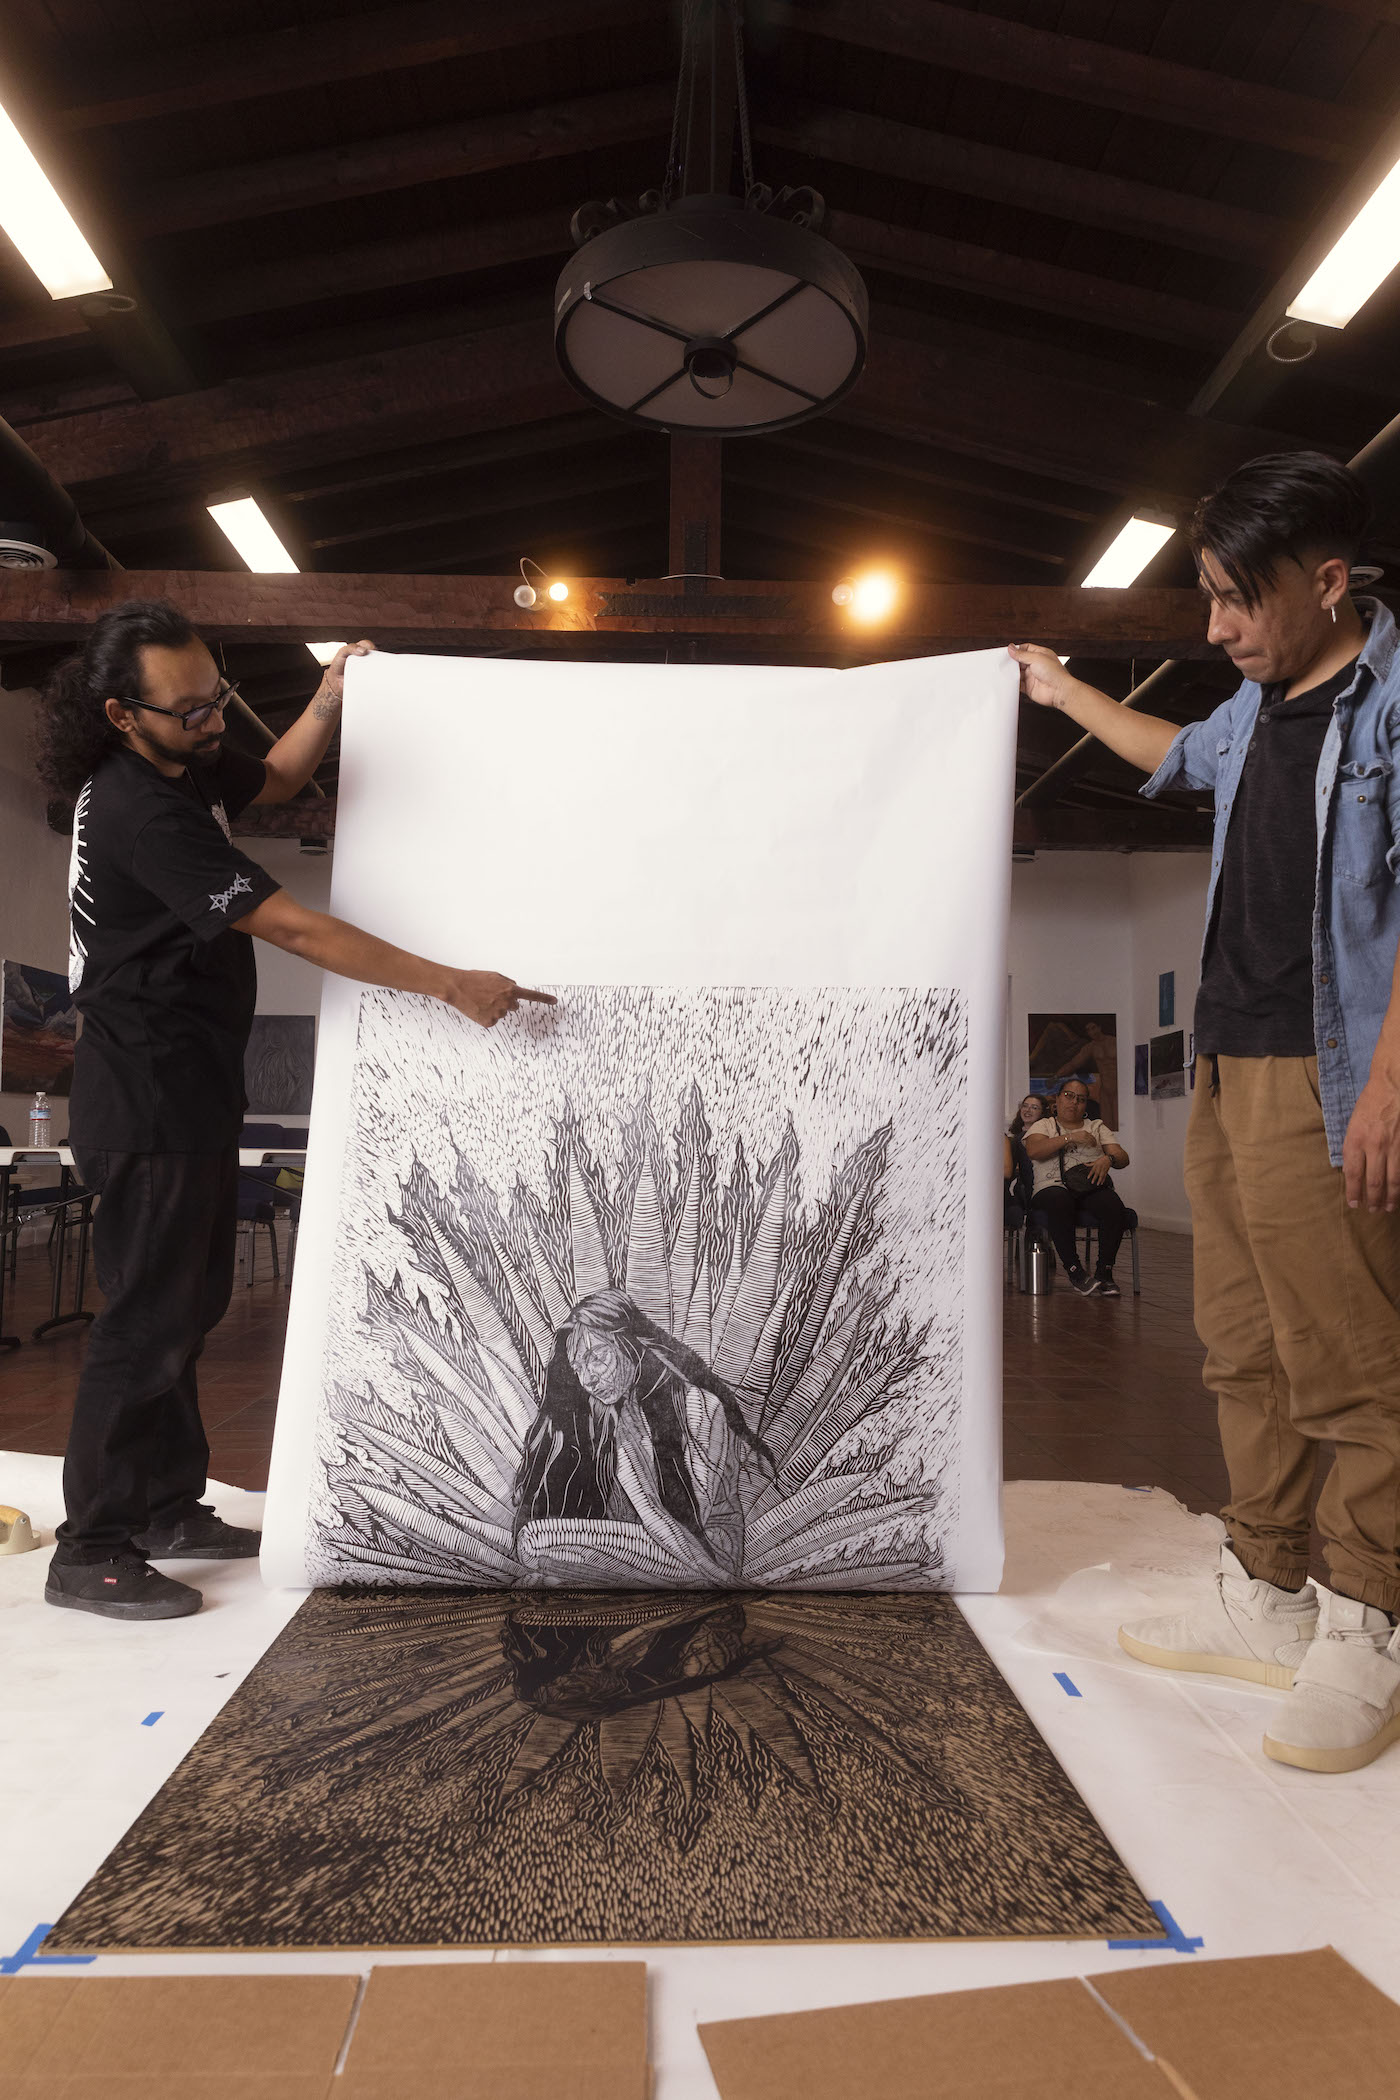 2 artists showcase their work